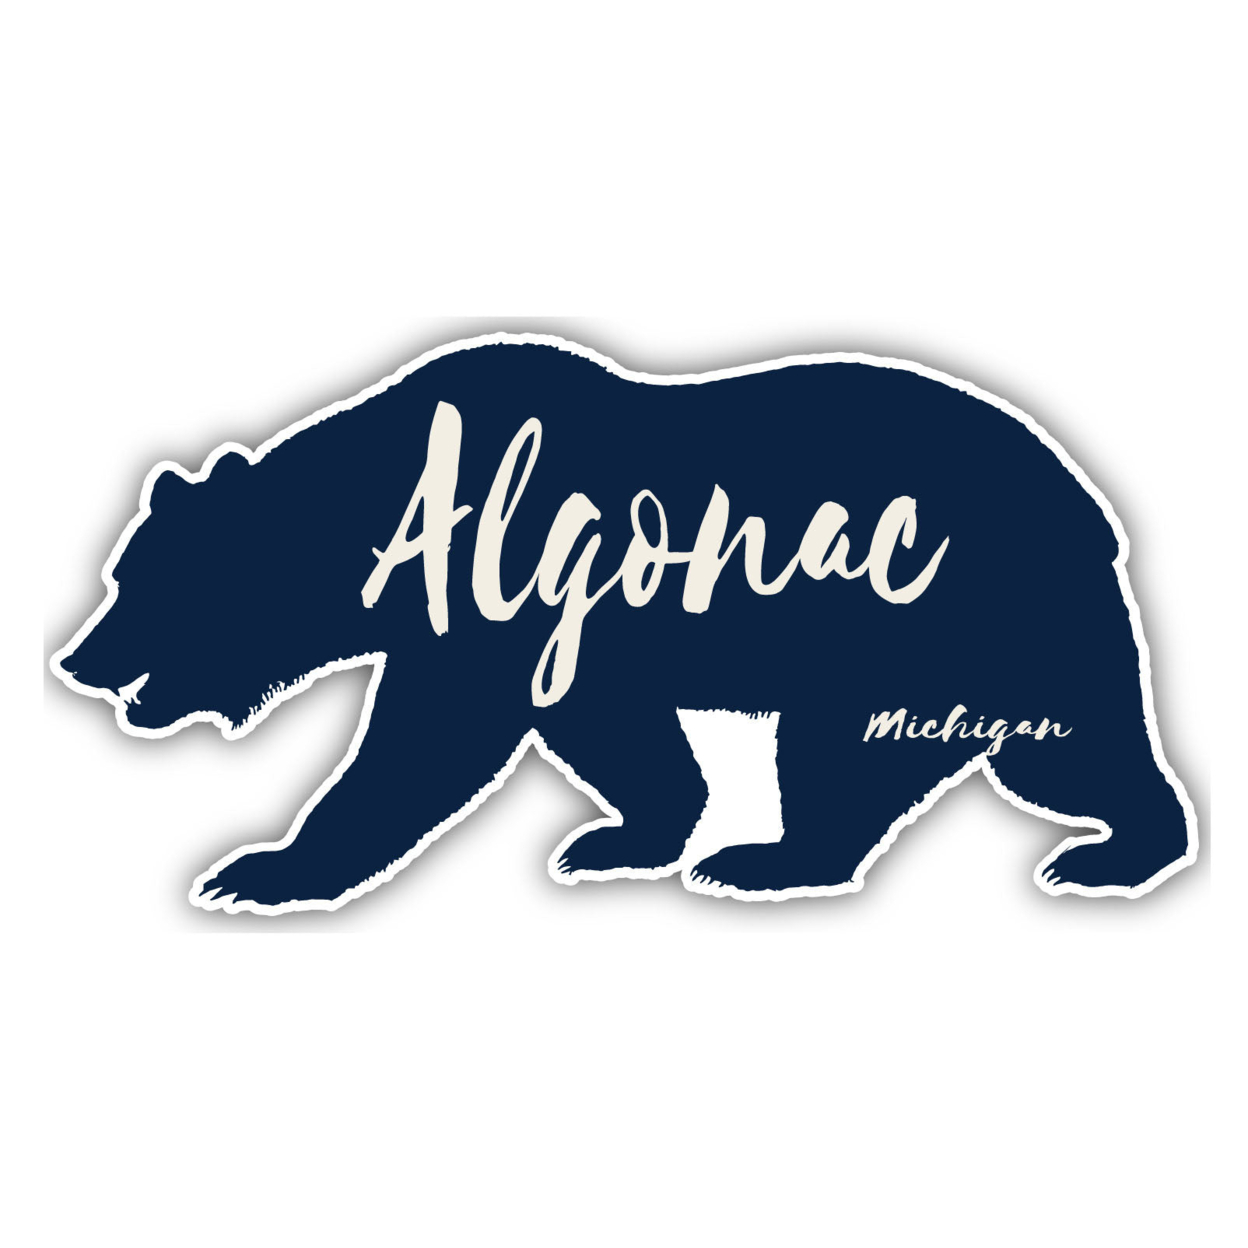 Algonac Michigan Souvenir Decorative Stickers (Choose Theme And Size) - Single Unit, 10-Inch, Bear